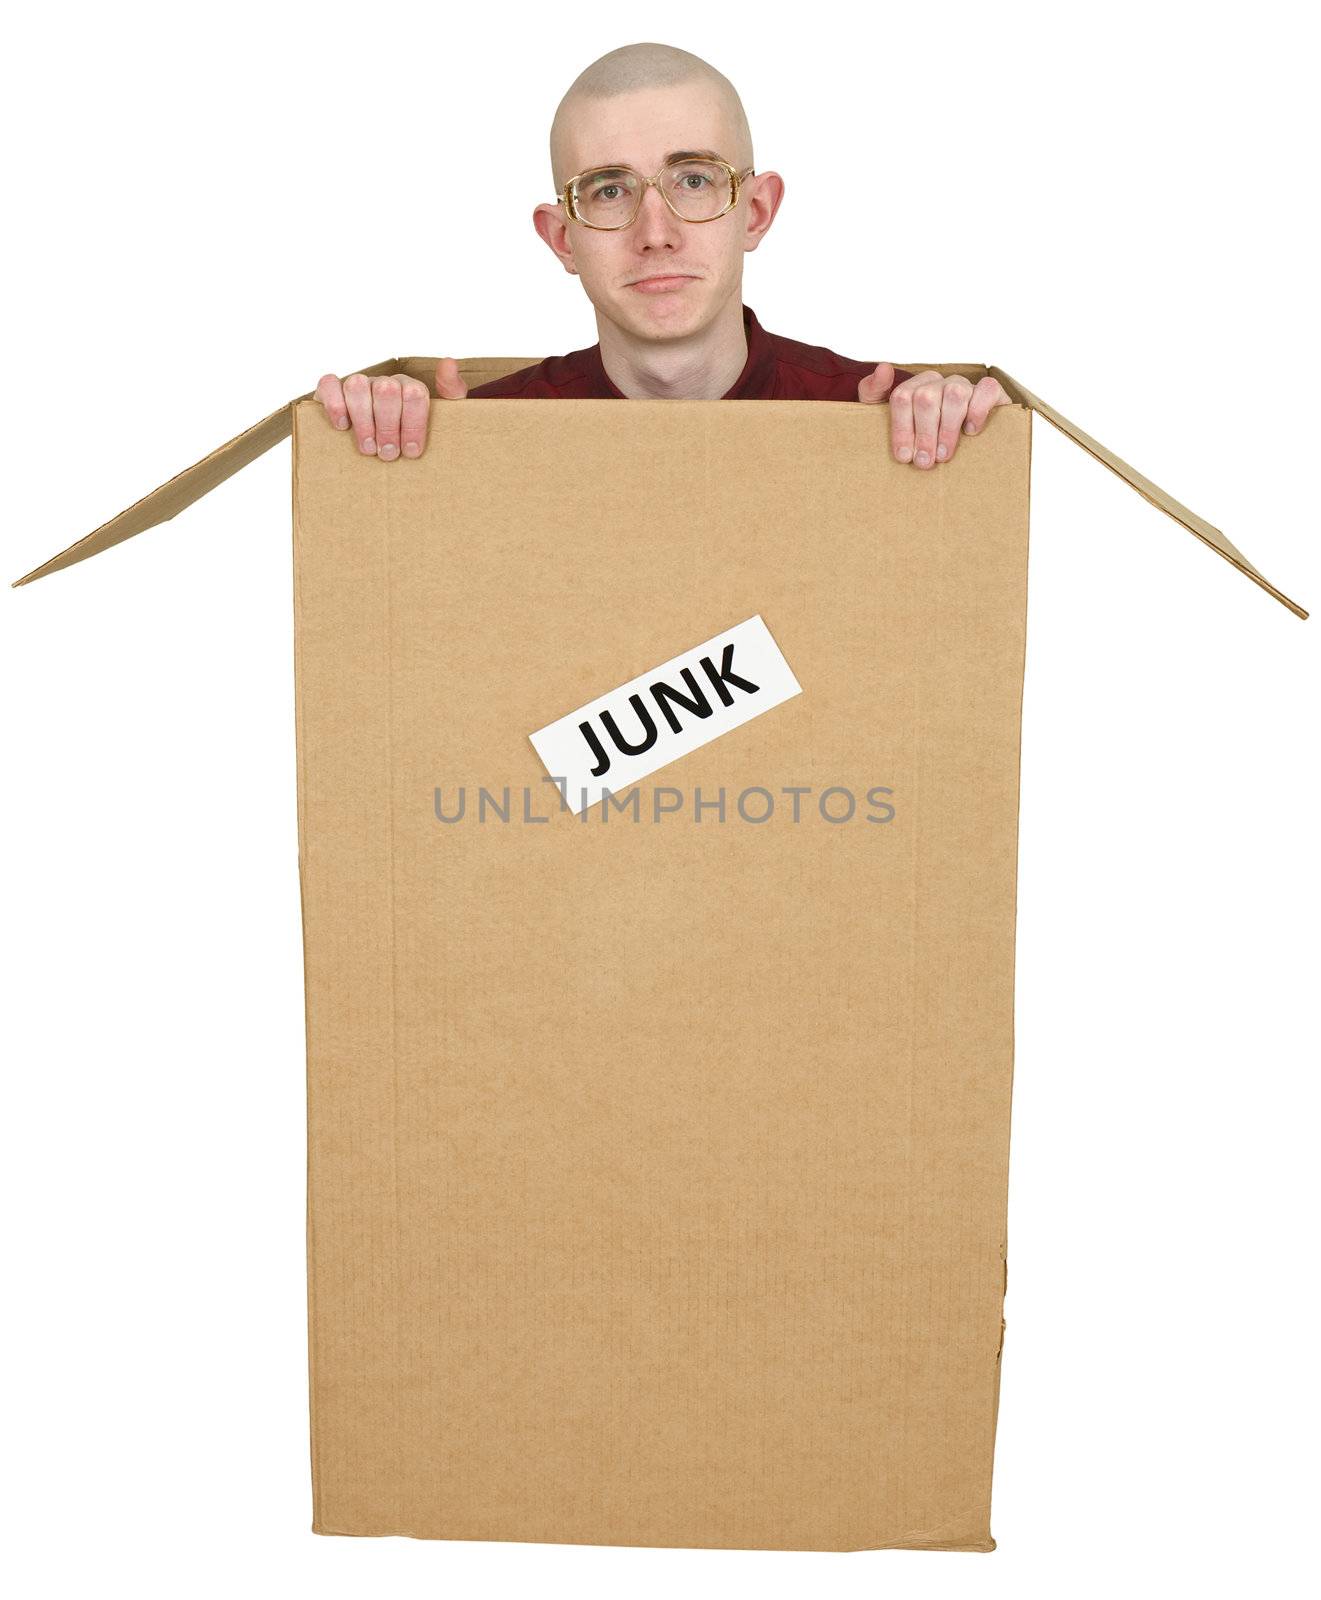 Man in carton with inscription "Junk"